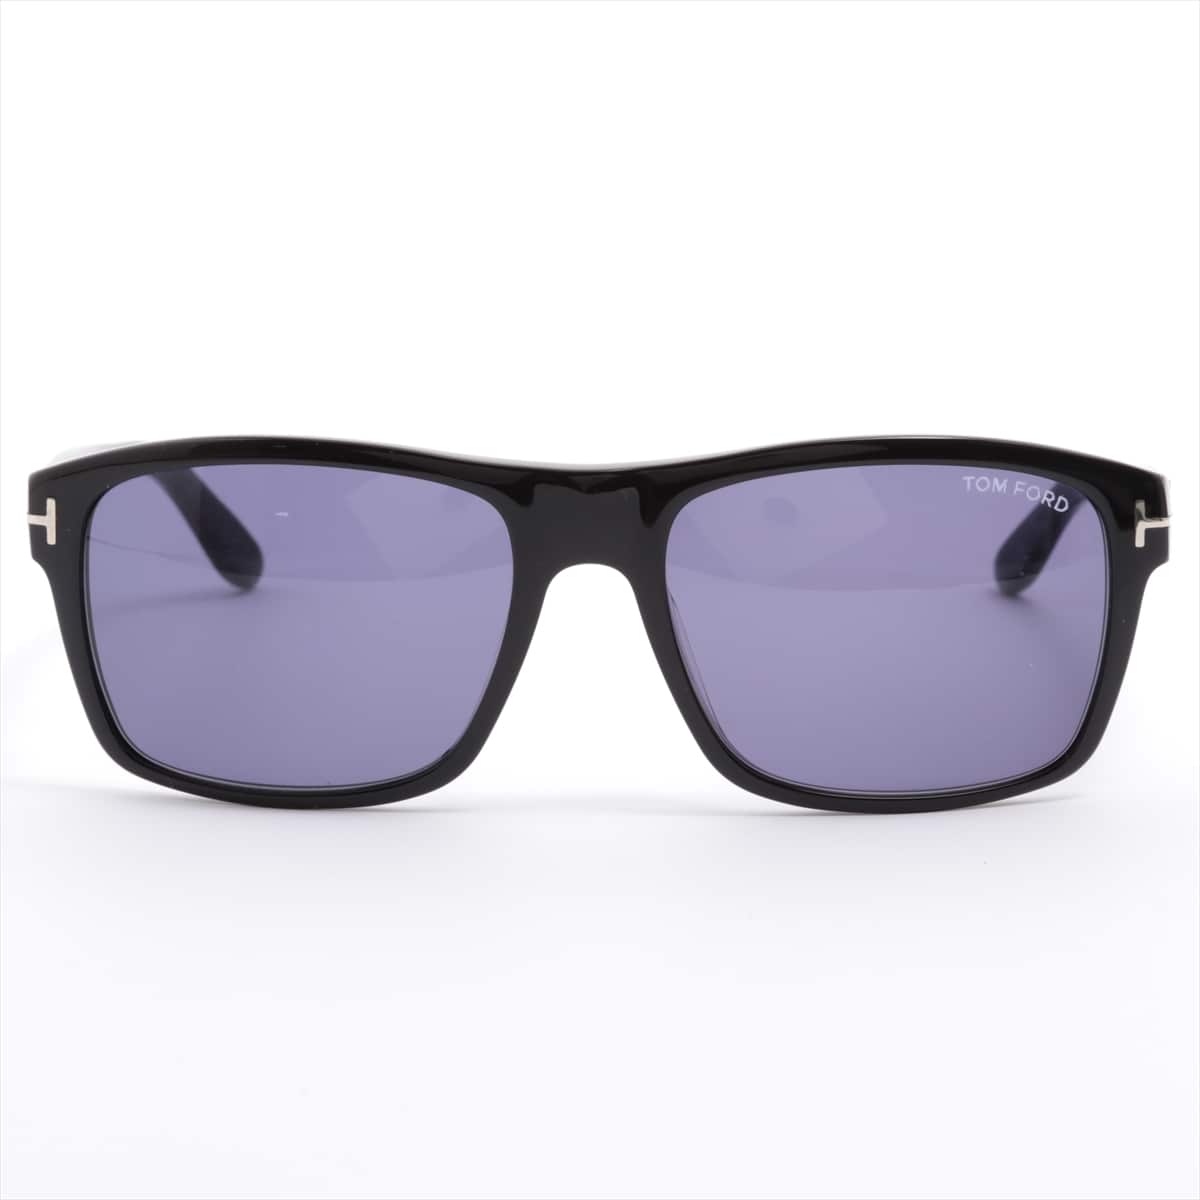 Tom Ford TF678-F Sunglasses Plastic Black